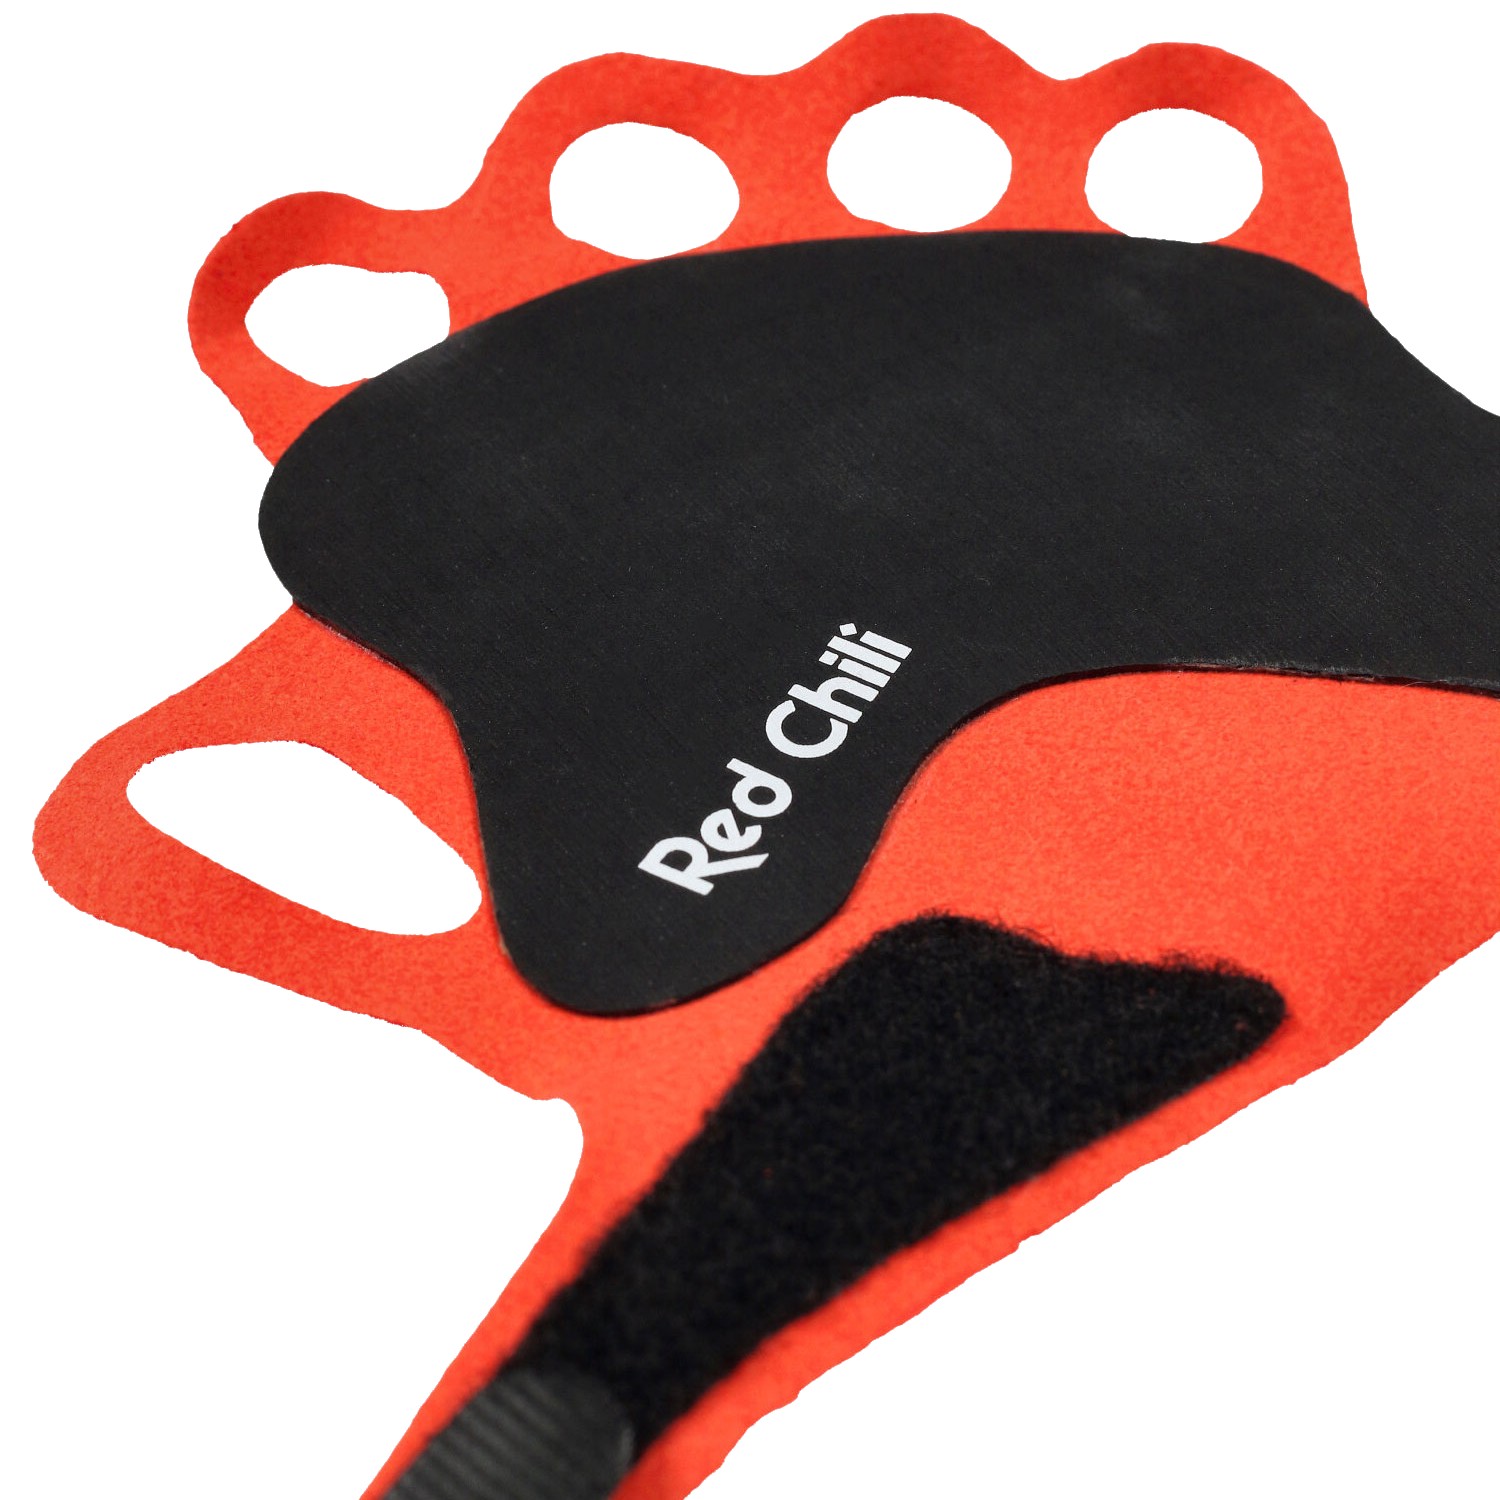 Red Chili Jamrock Crack Climbing Gloves